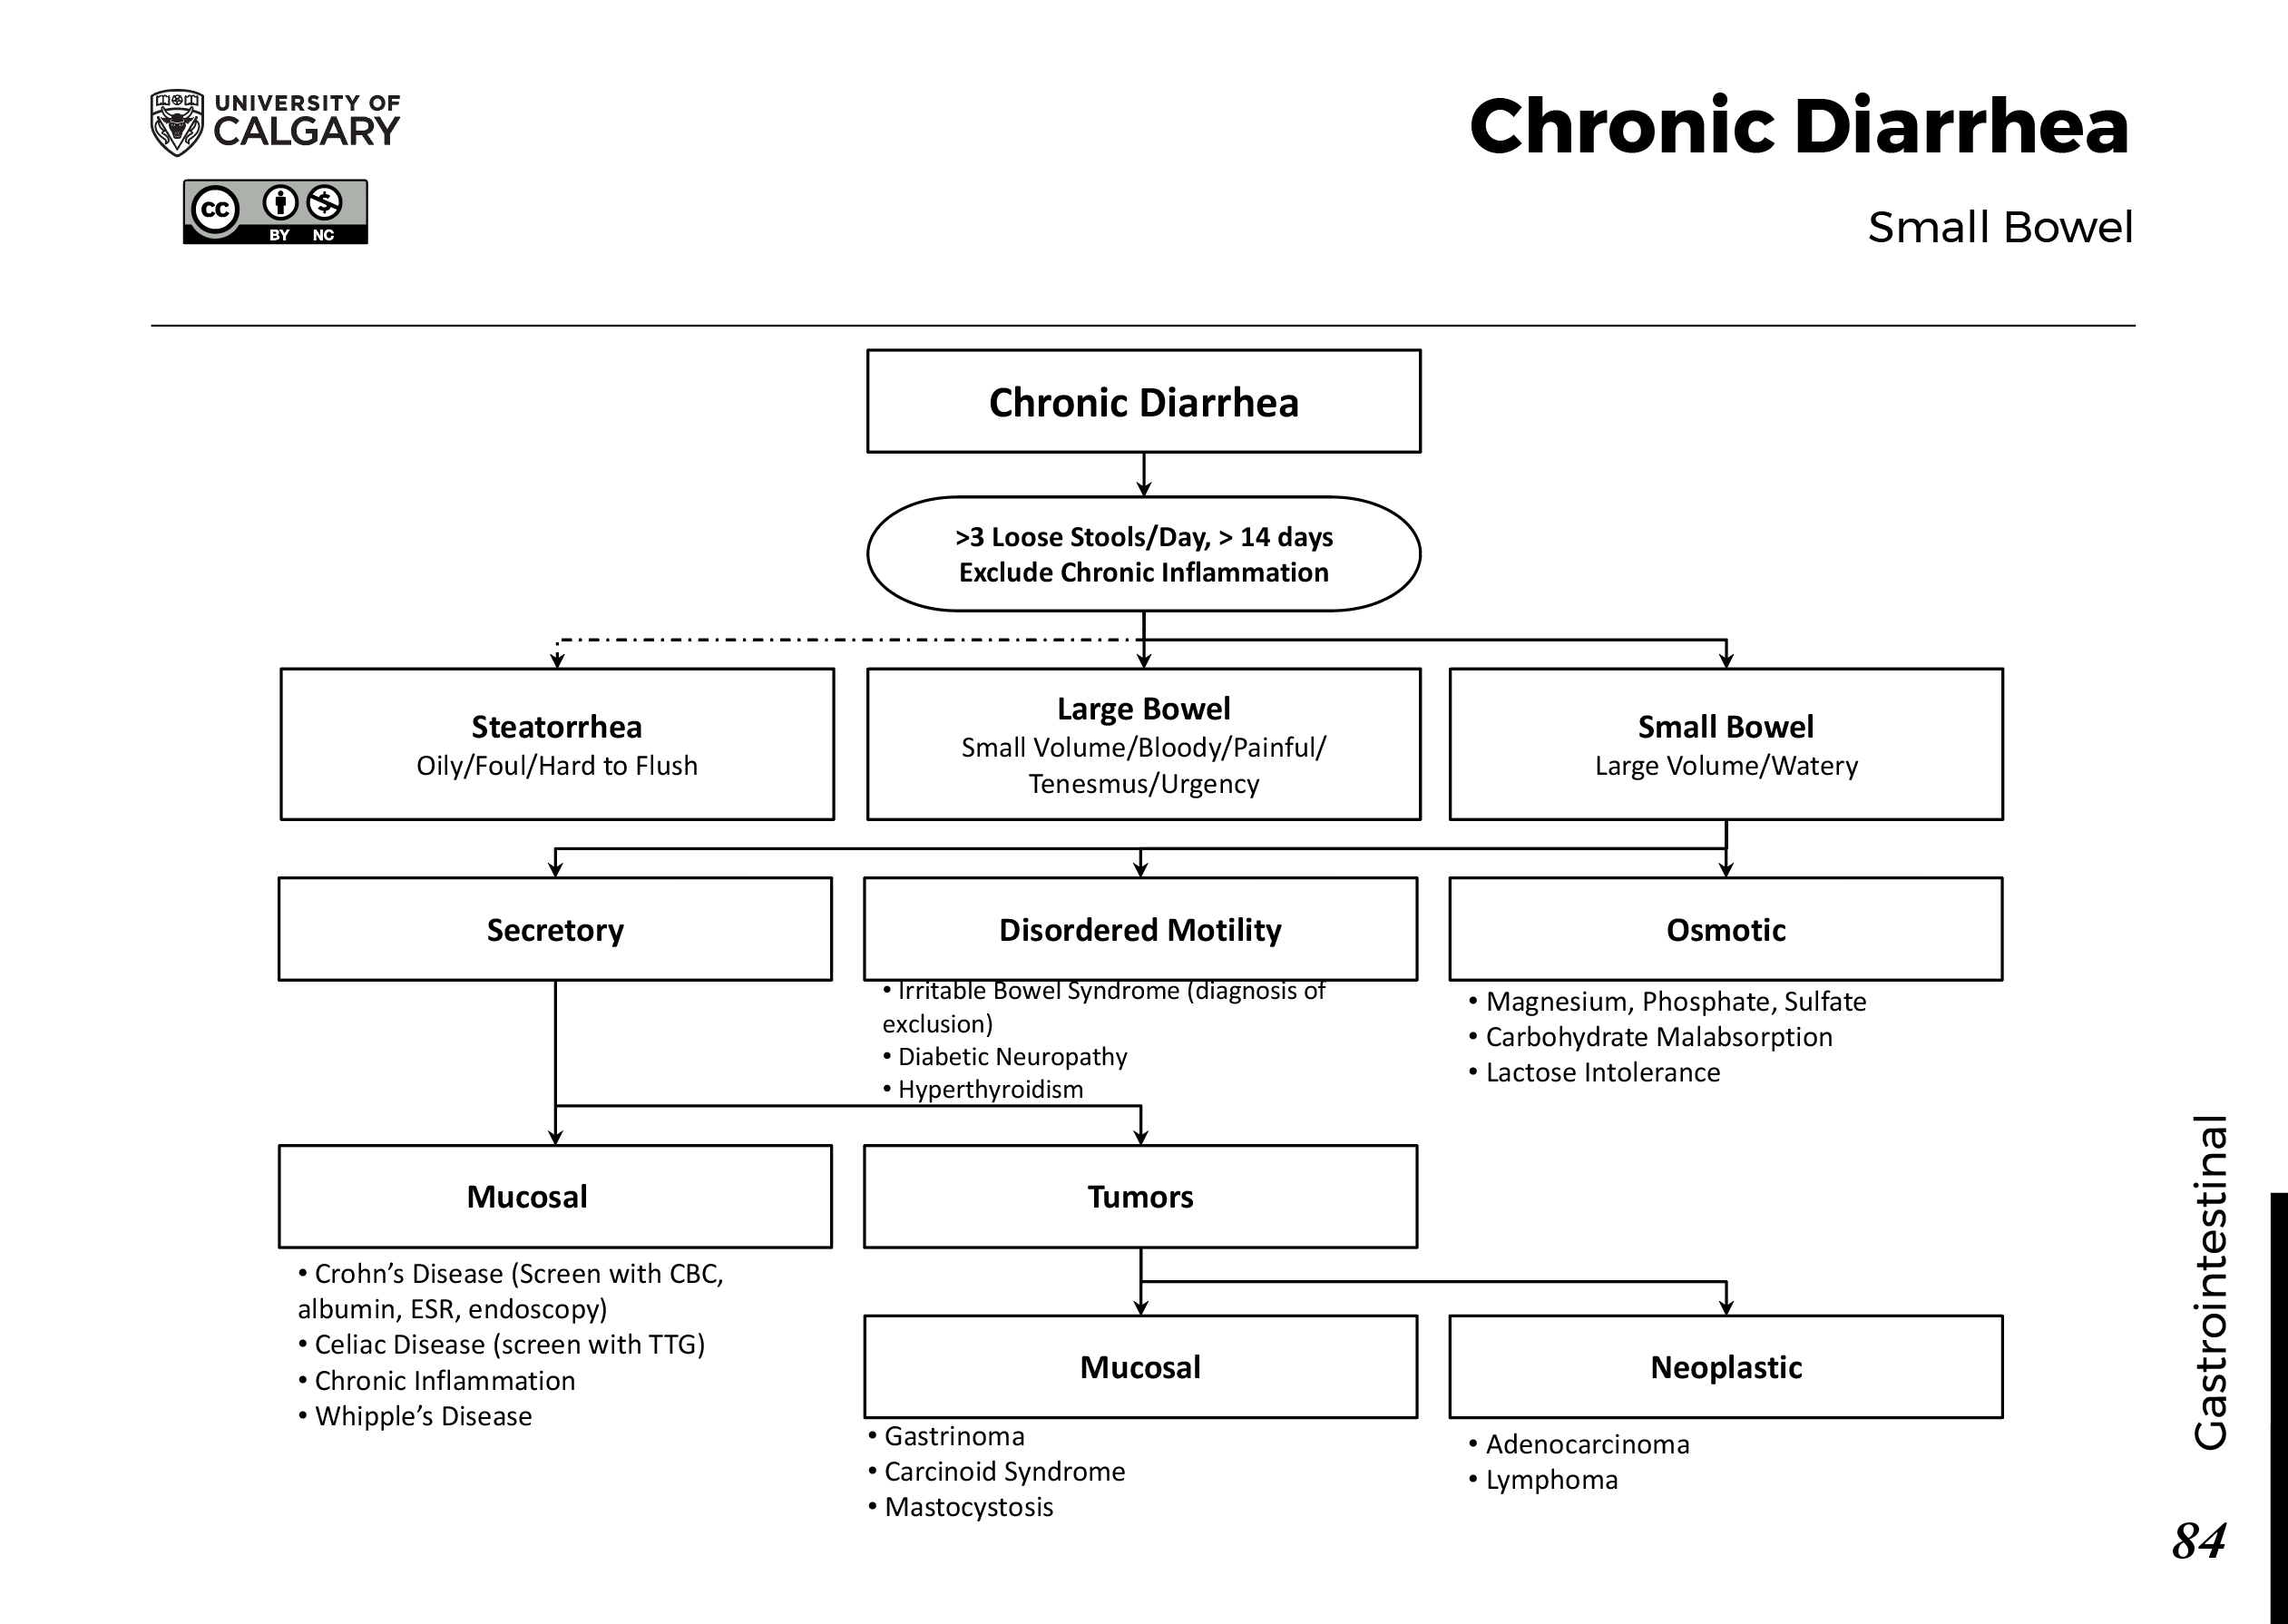 CHRONIC DIARRHEA: Small Bowel Scheme